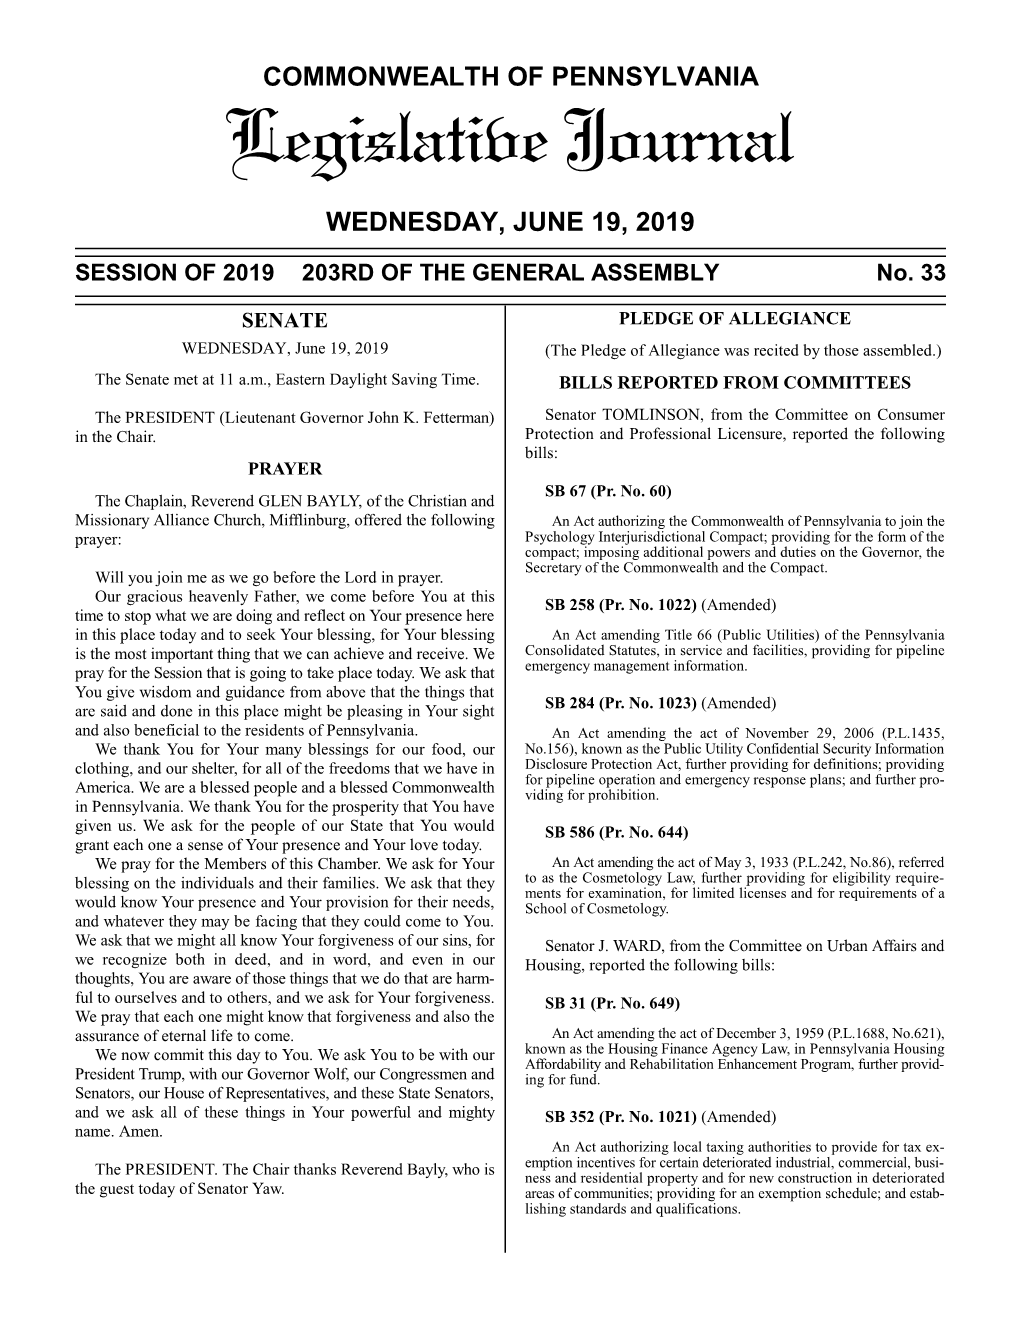 Legislative Journal